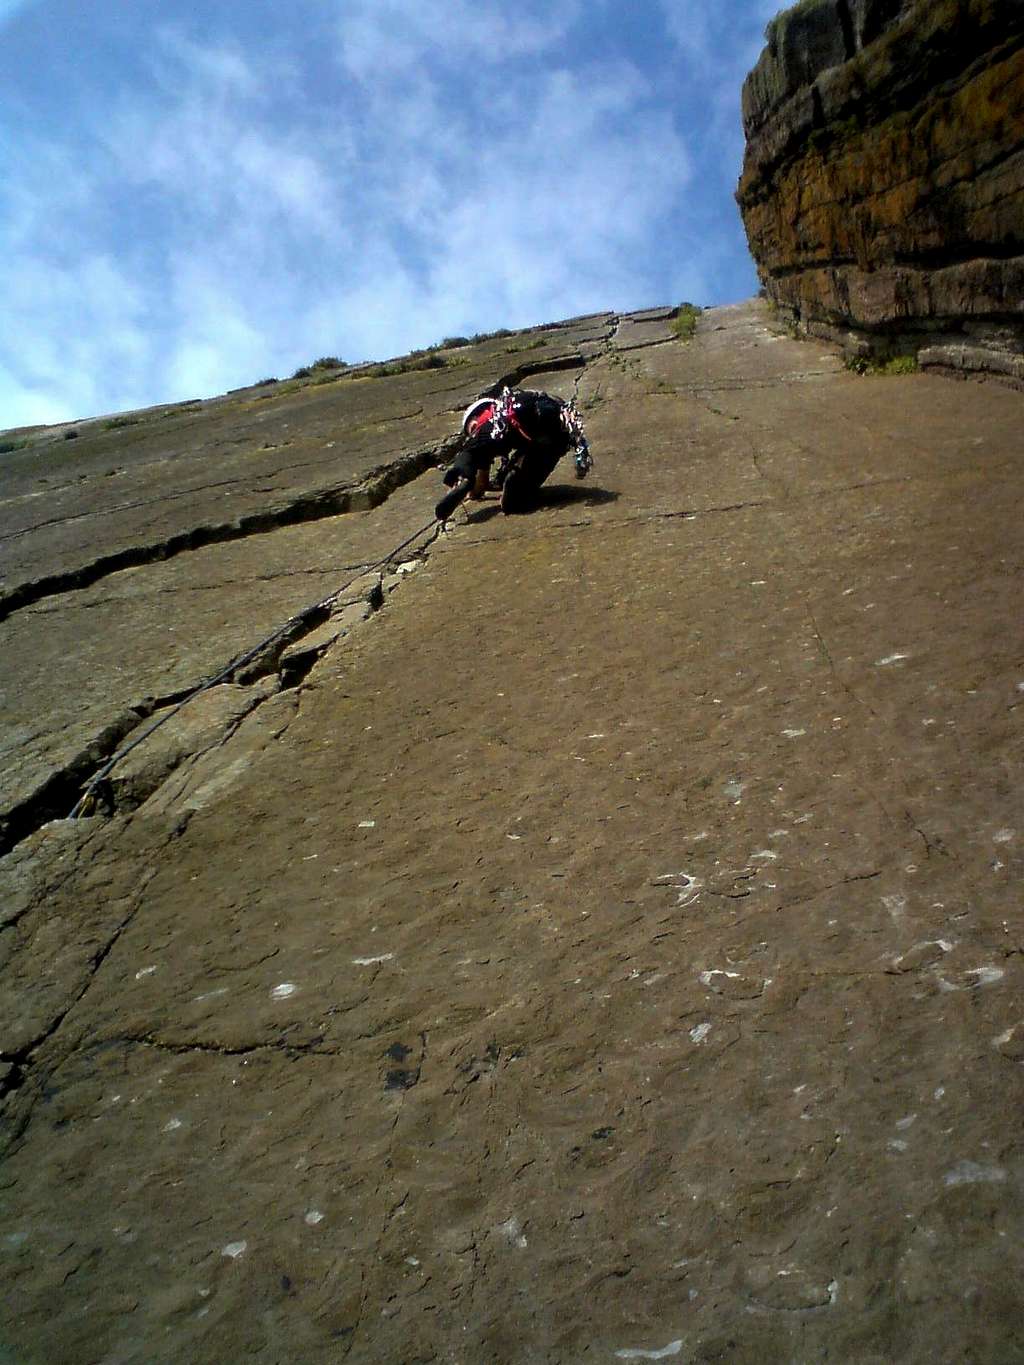 Trad climb in the UK